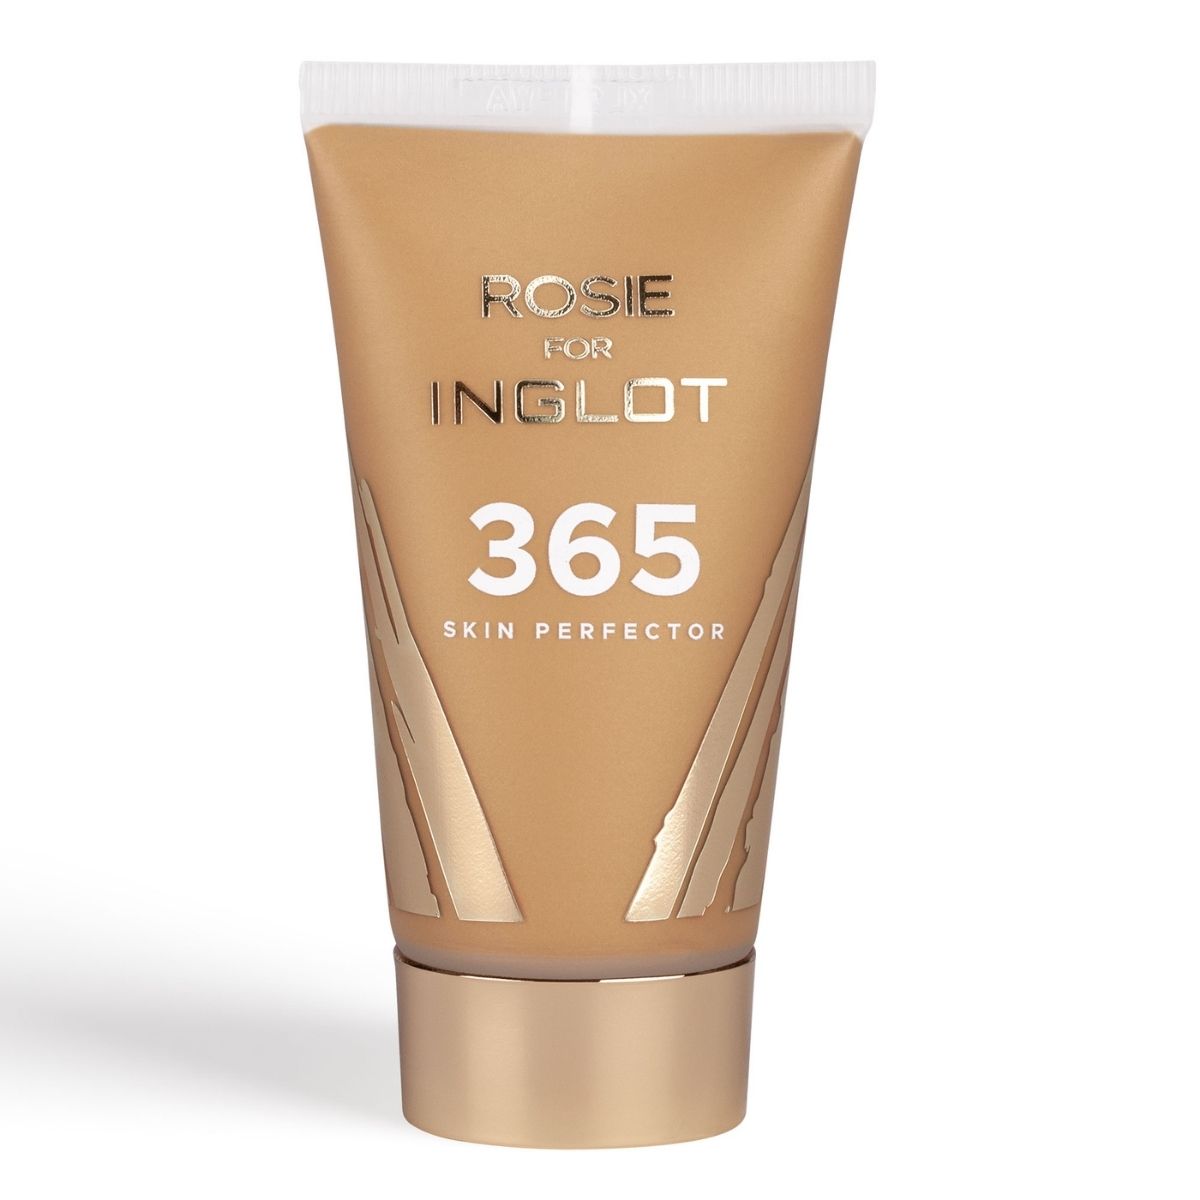 Inglot Rosie 365 Skin Perfector. 20% off